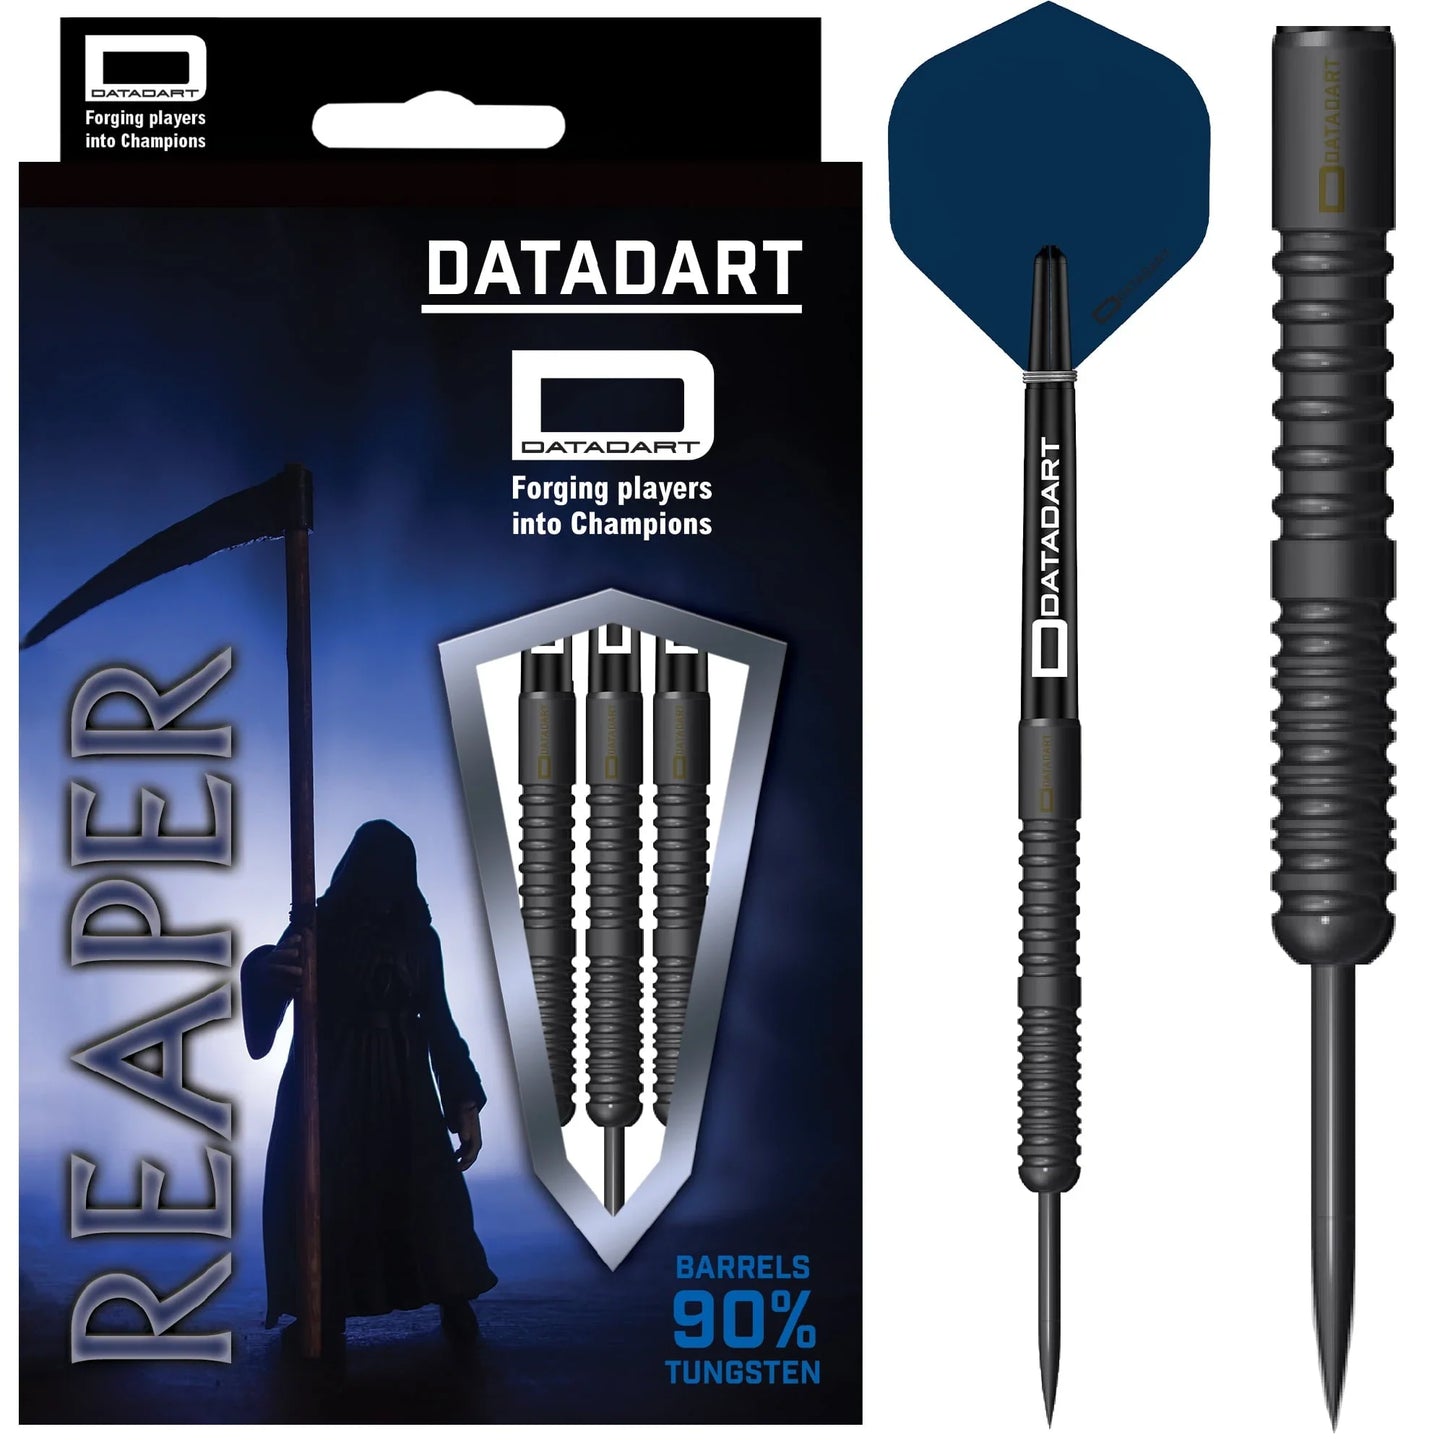 Datadart Reaper 21g Steel Tip Darts